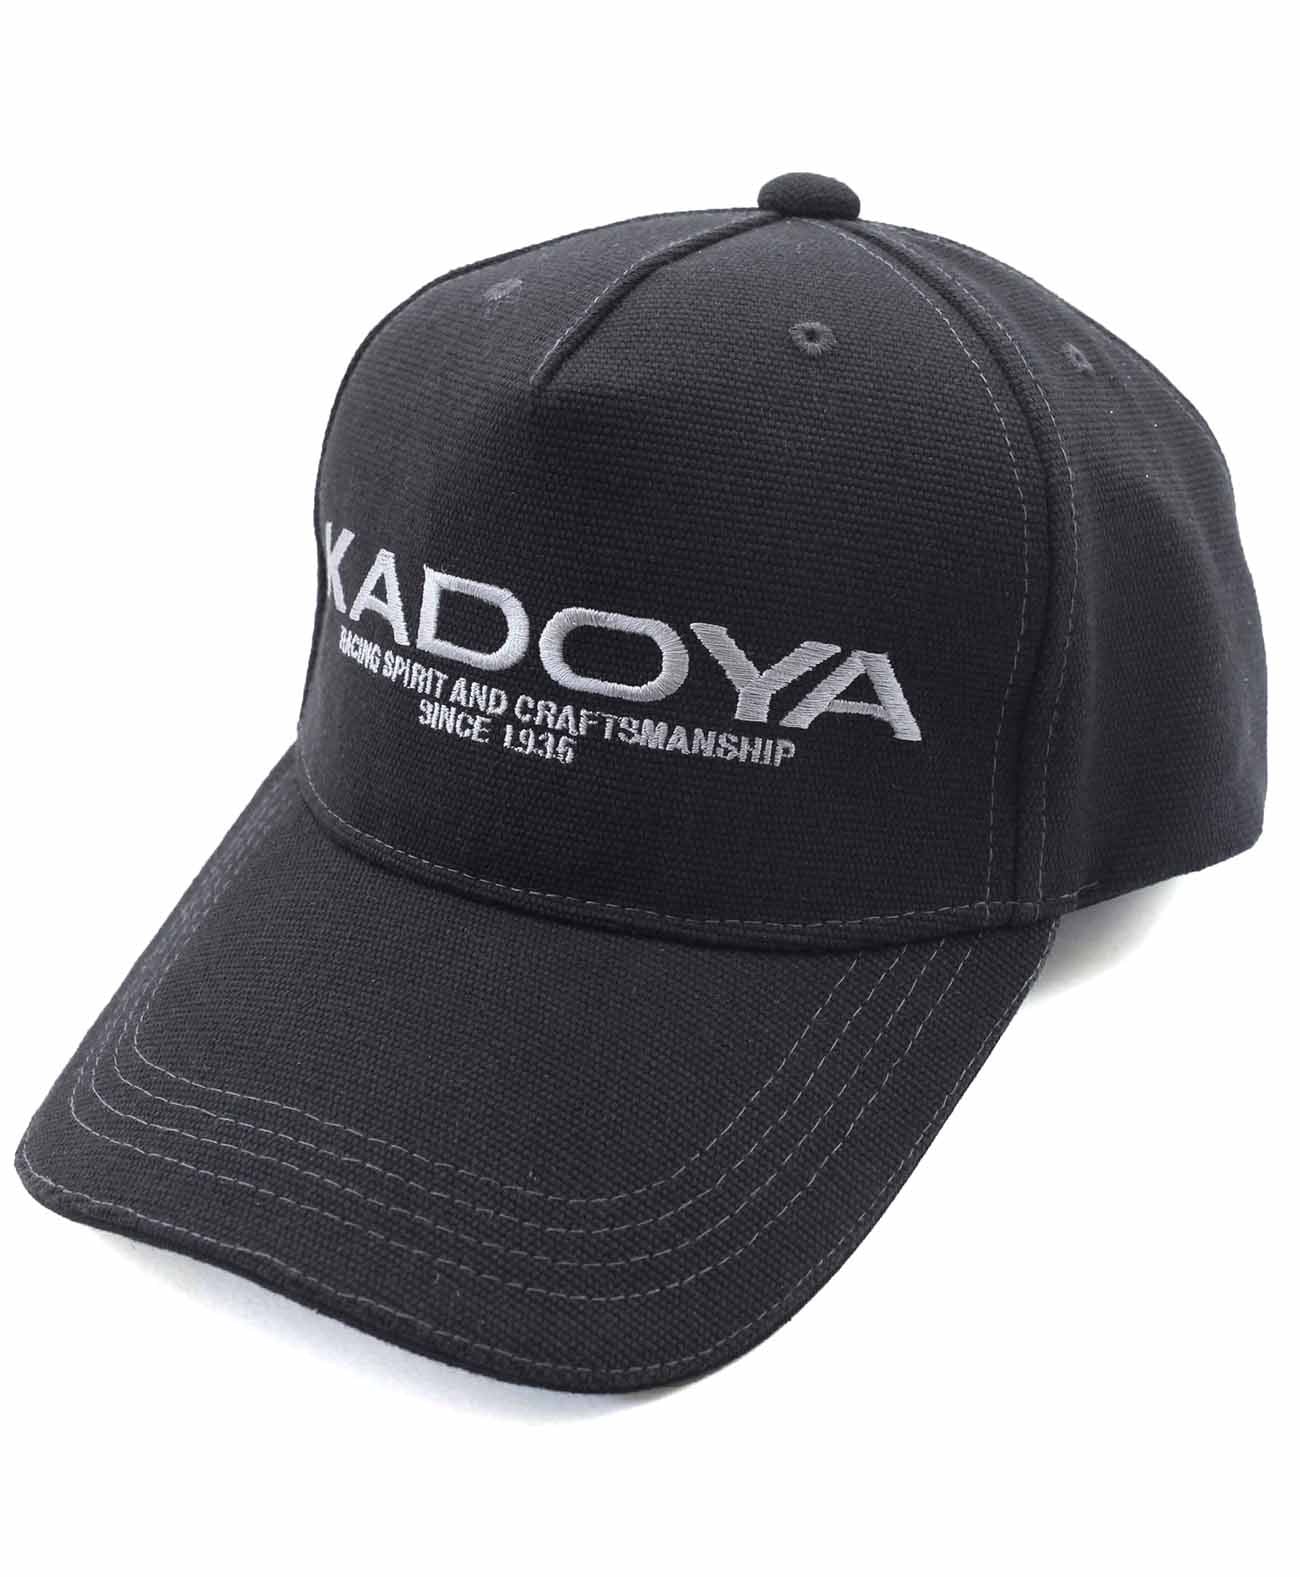 KADOYA LOGO CAP / Black/Gray